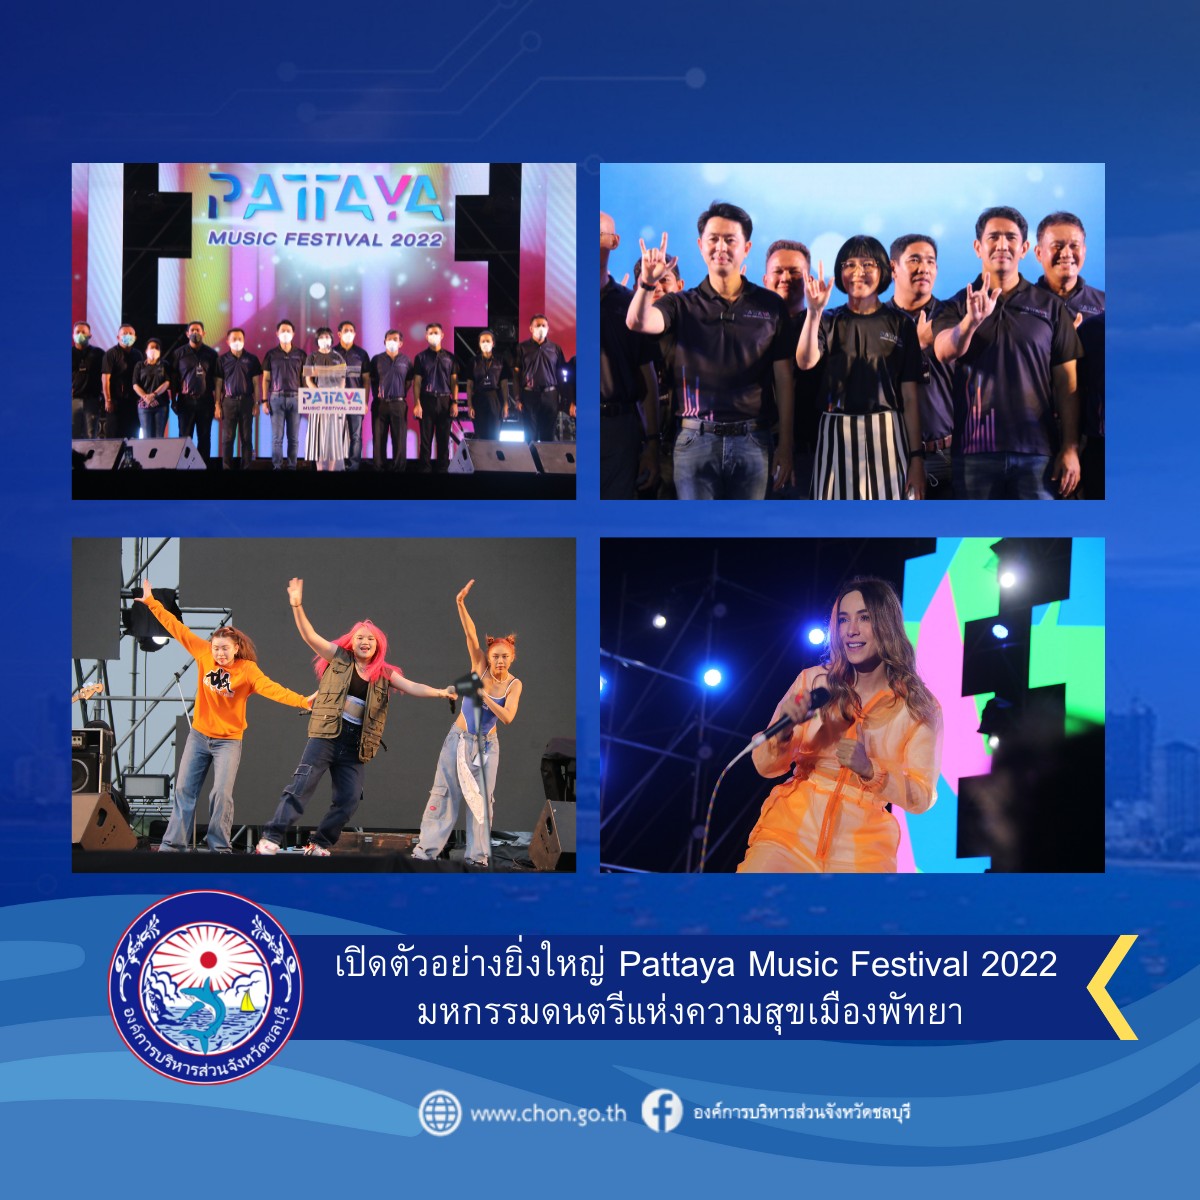 Pattaya Music Festival 2022 มหกรรมดนตรีแห่งความสุขเมืองพัทยา 